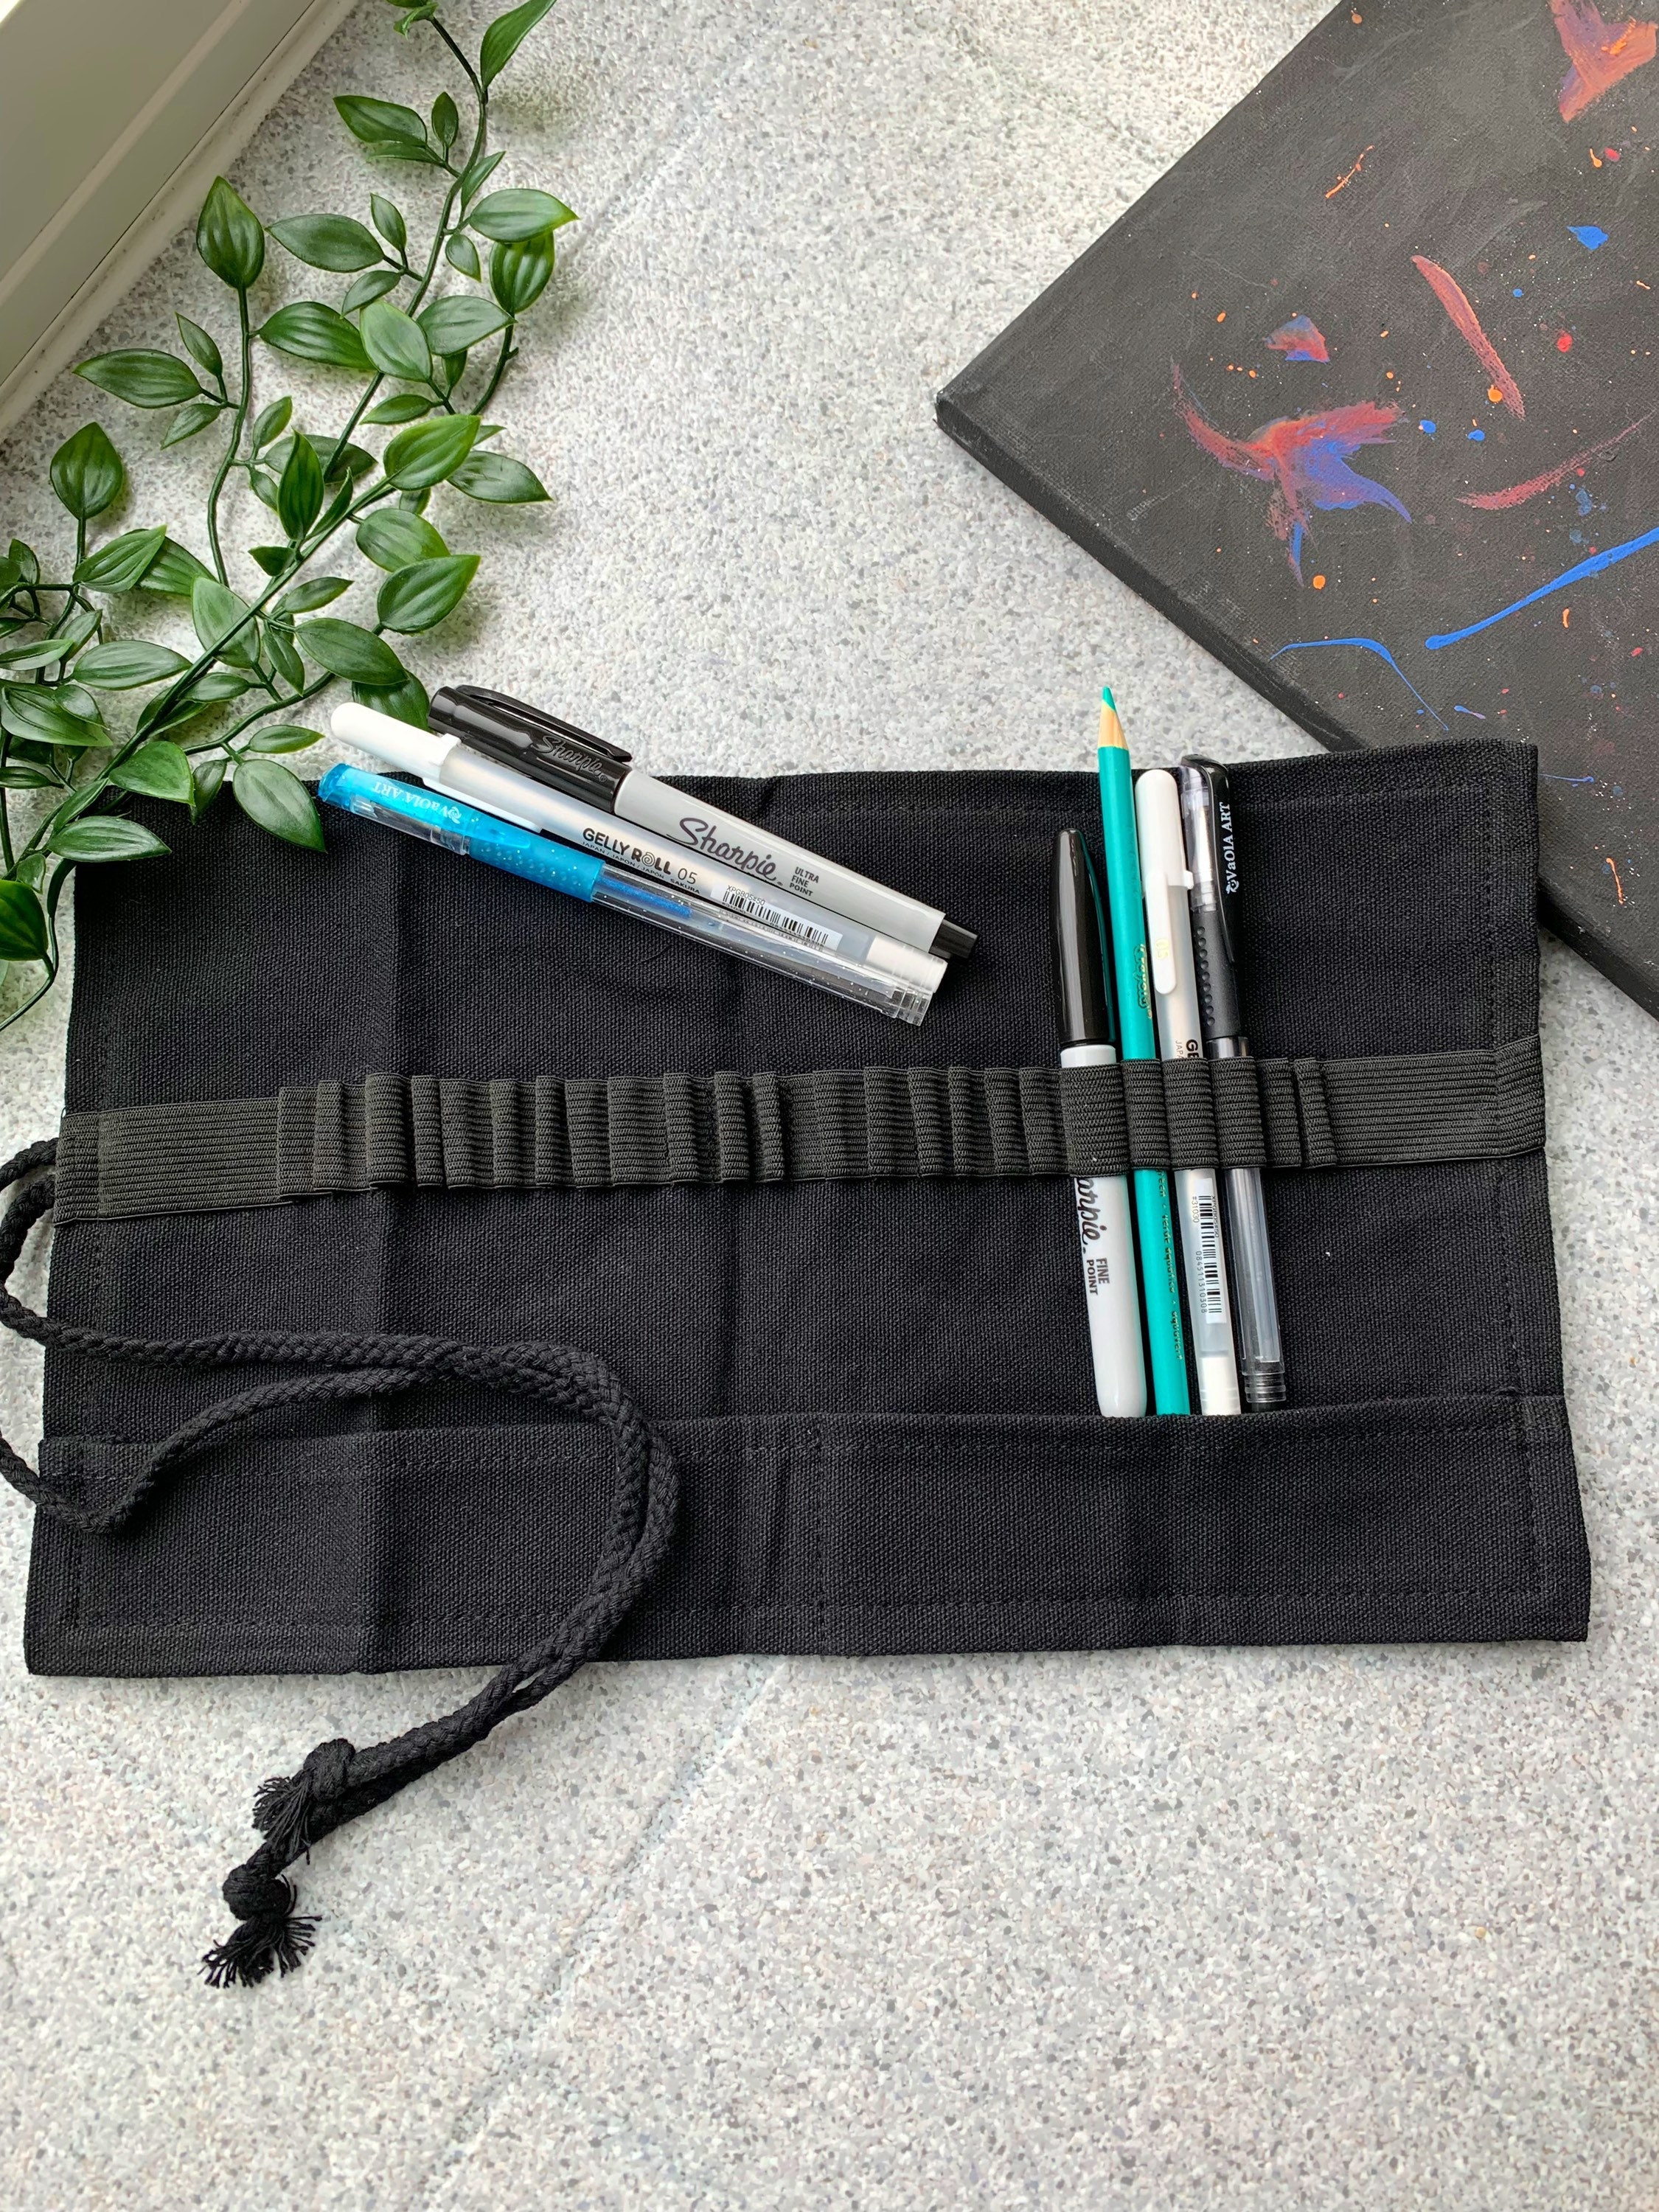 Pen + Gear Cloth Zipper Pencil Pouch, Pencil Case, Teal, 8.75 x 4.25 